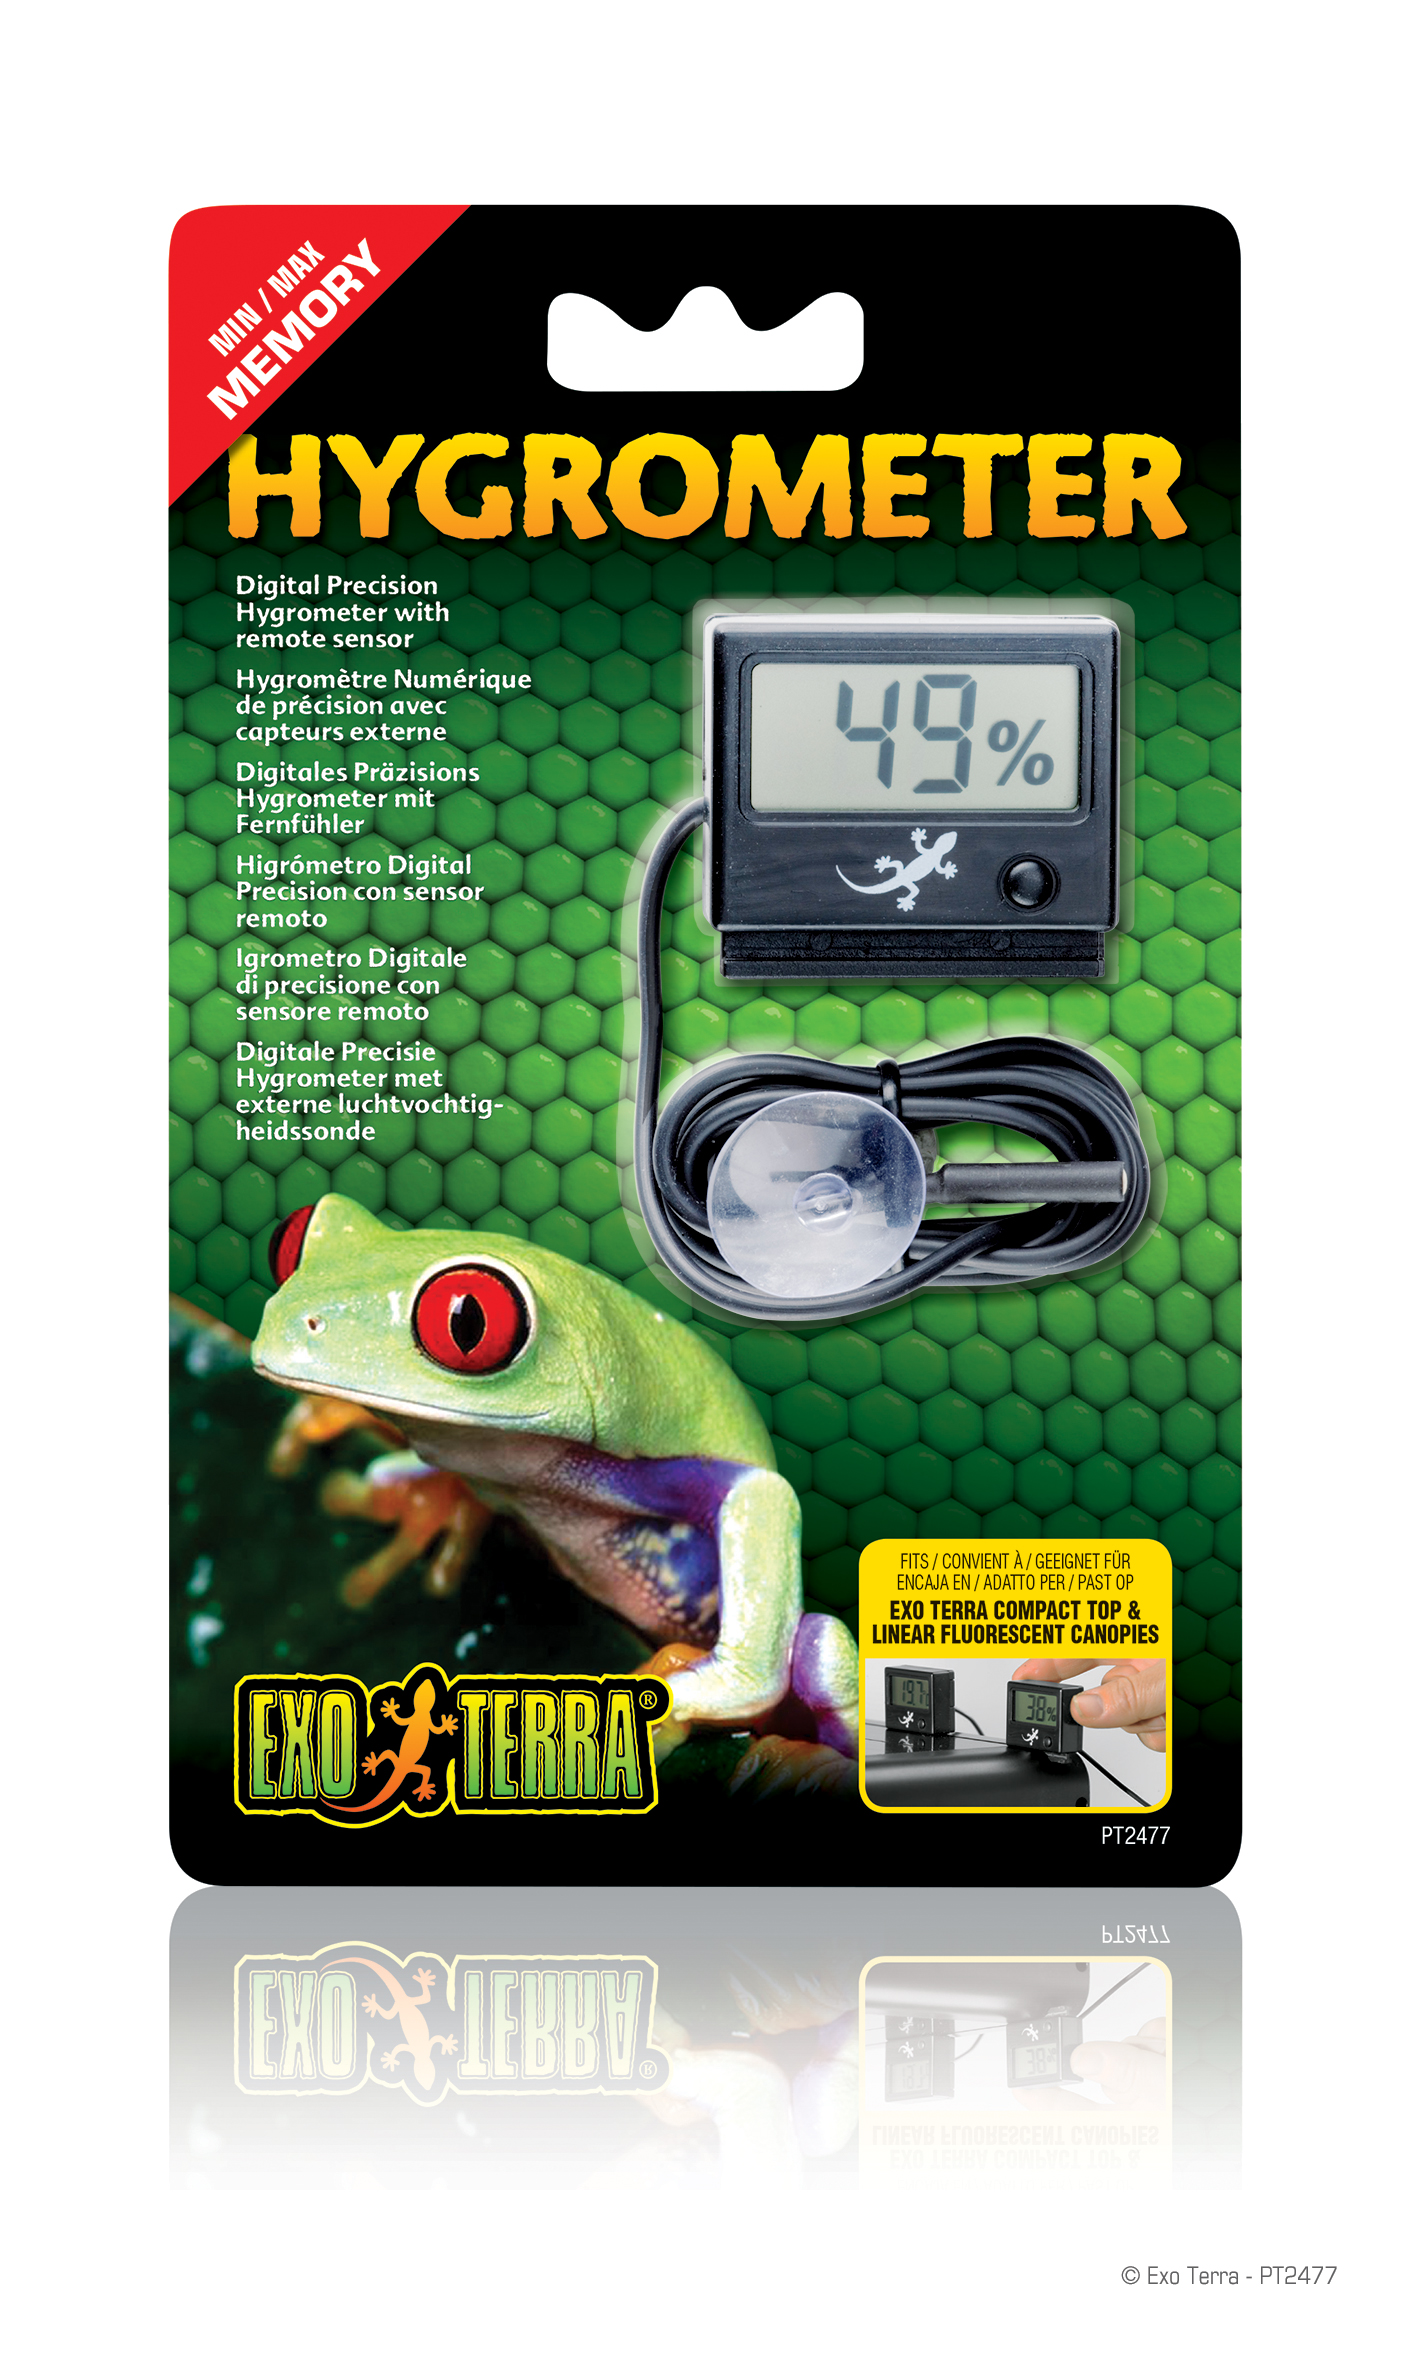 Ex digitale hygrometer met voeler - Product shot